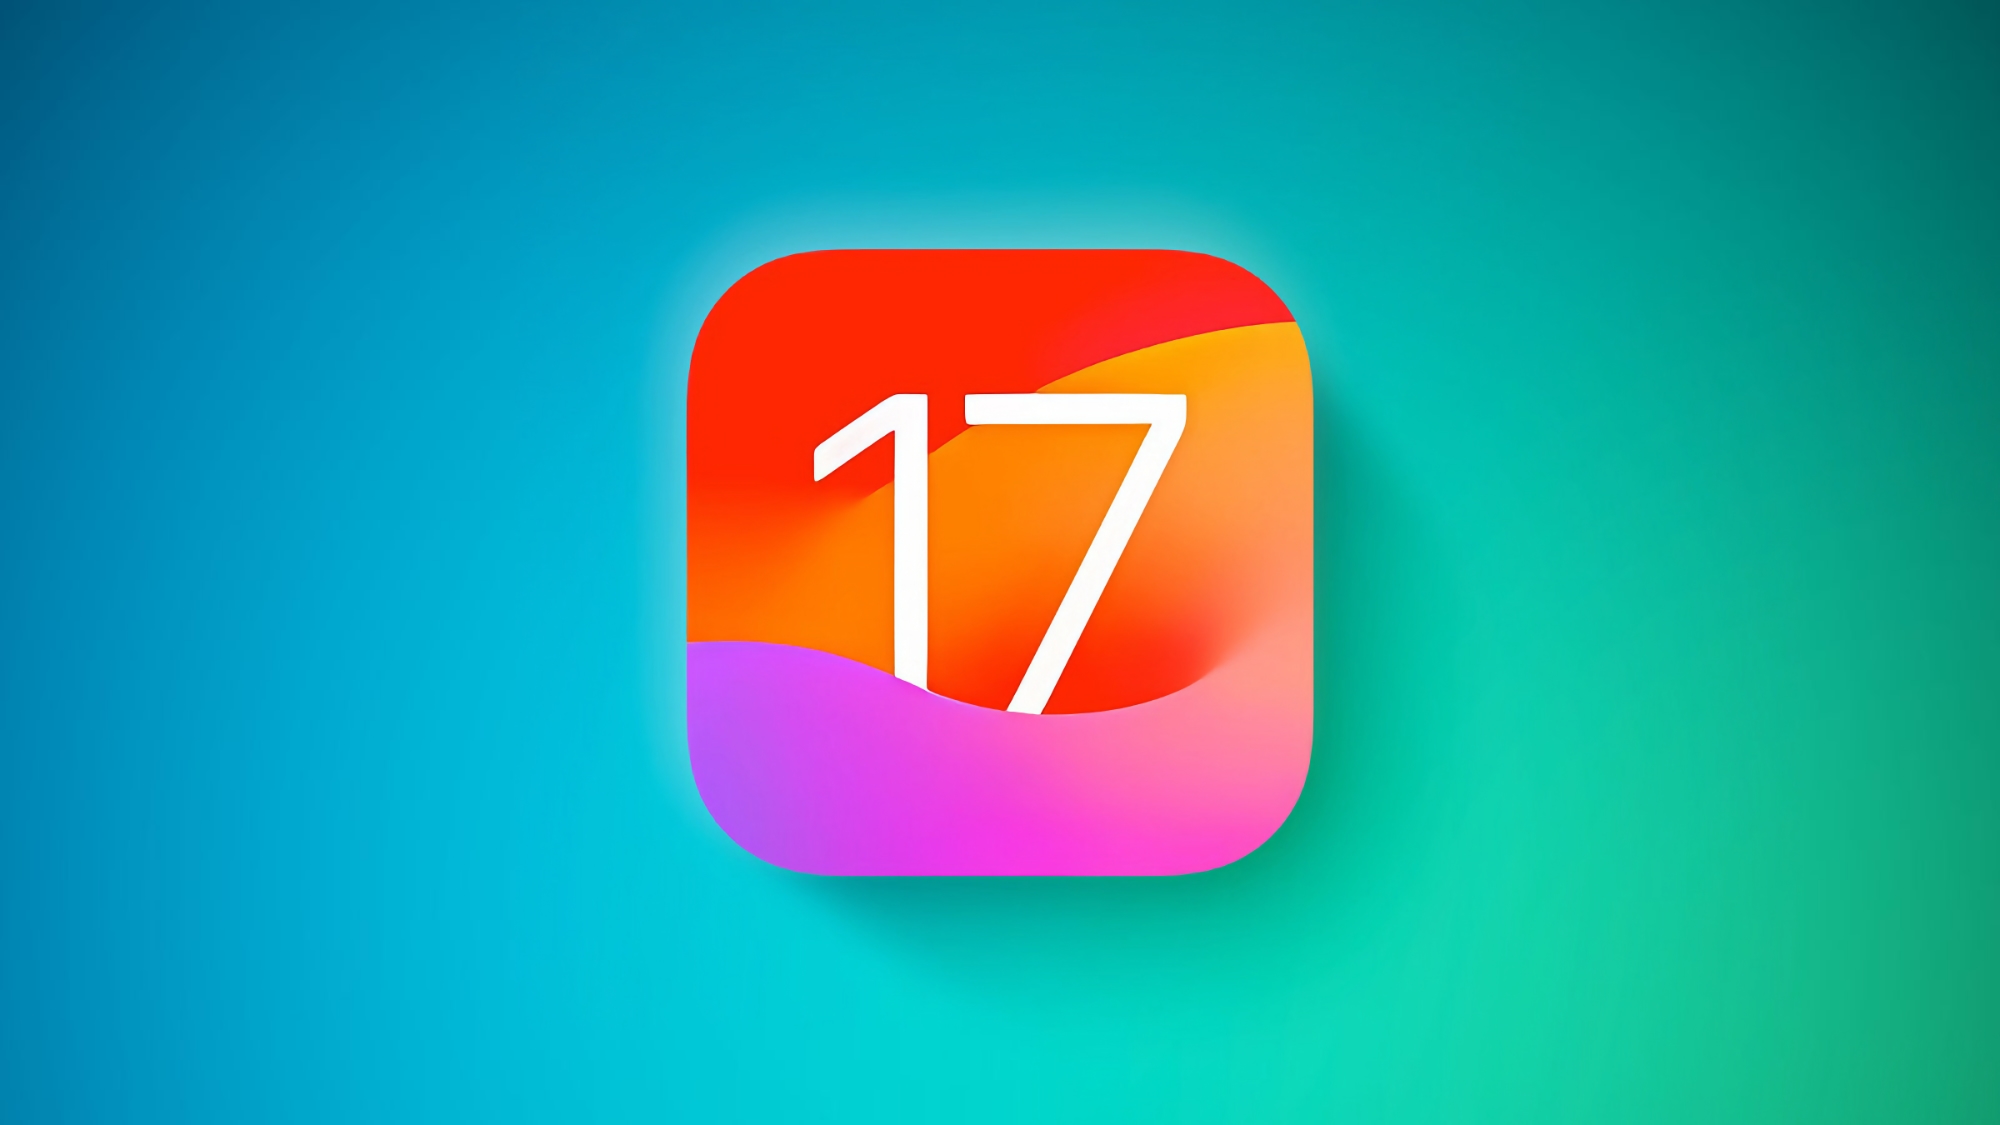 Apple has released iOS 17 Beta 2: what's new?